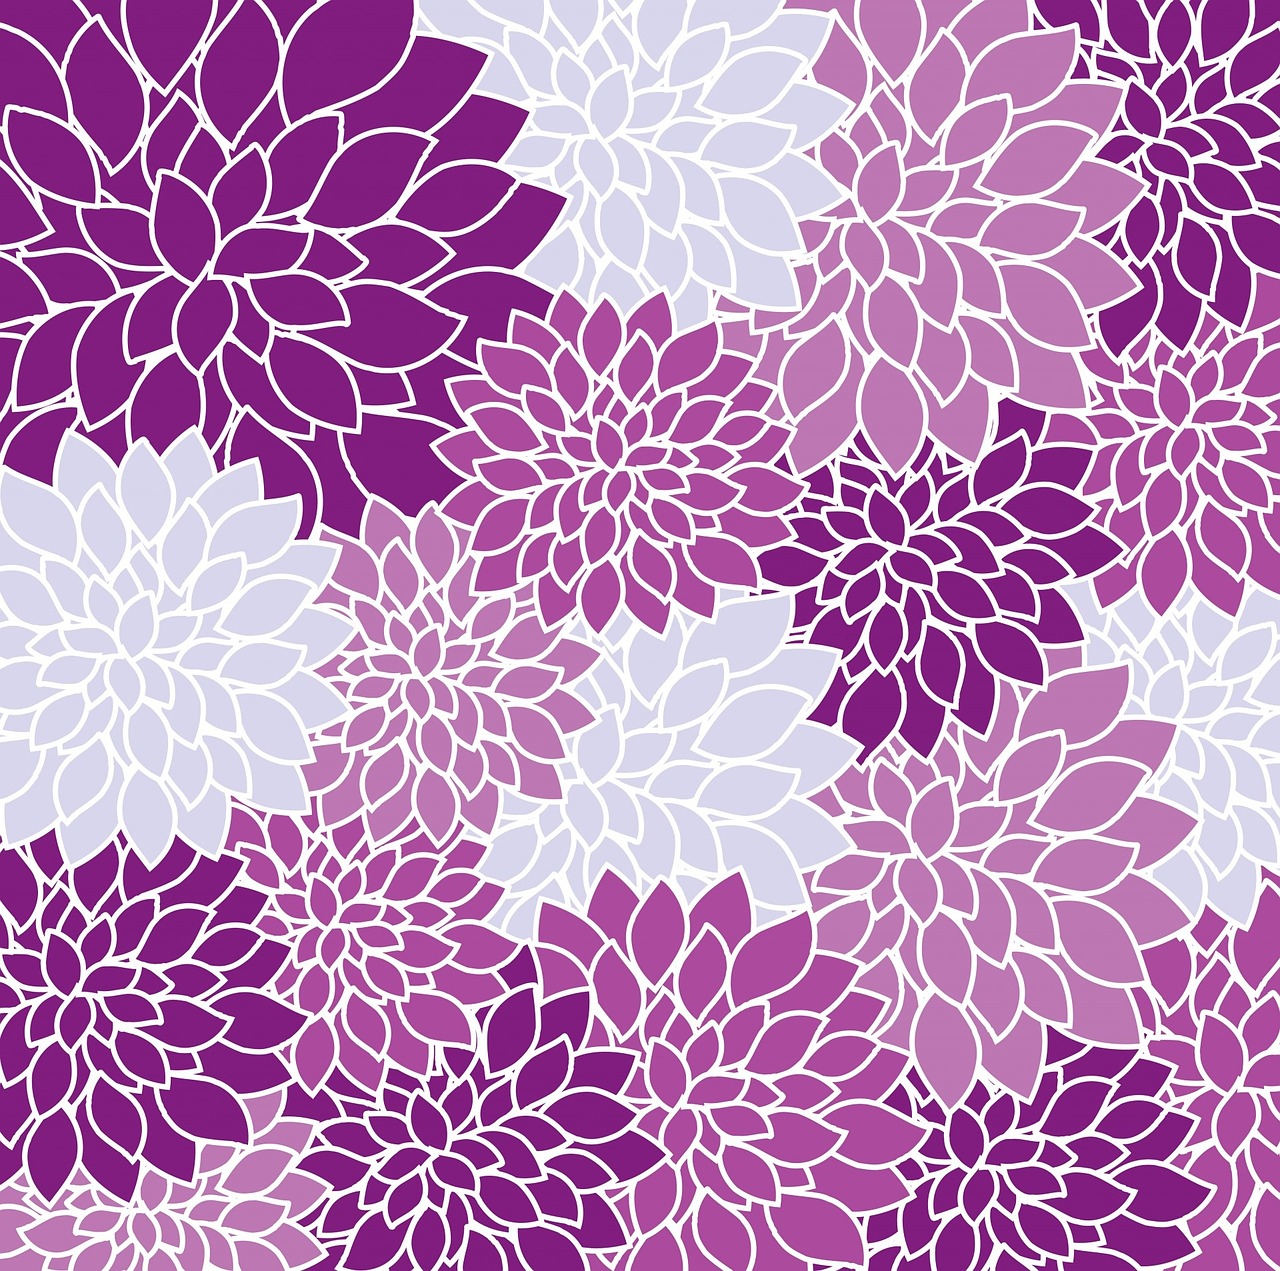 purple floral print background